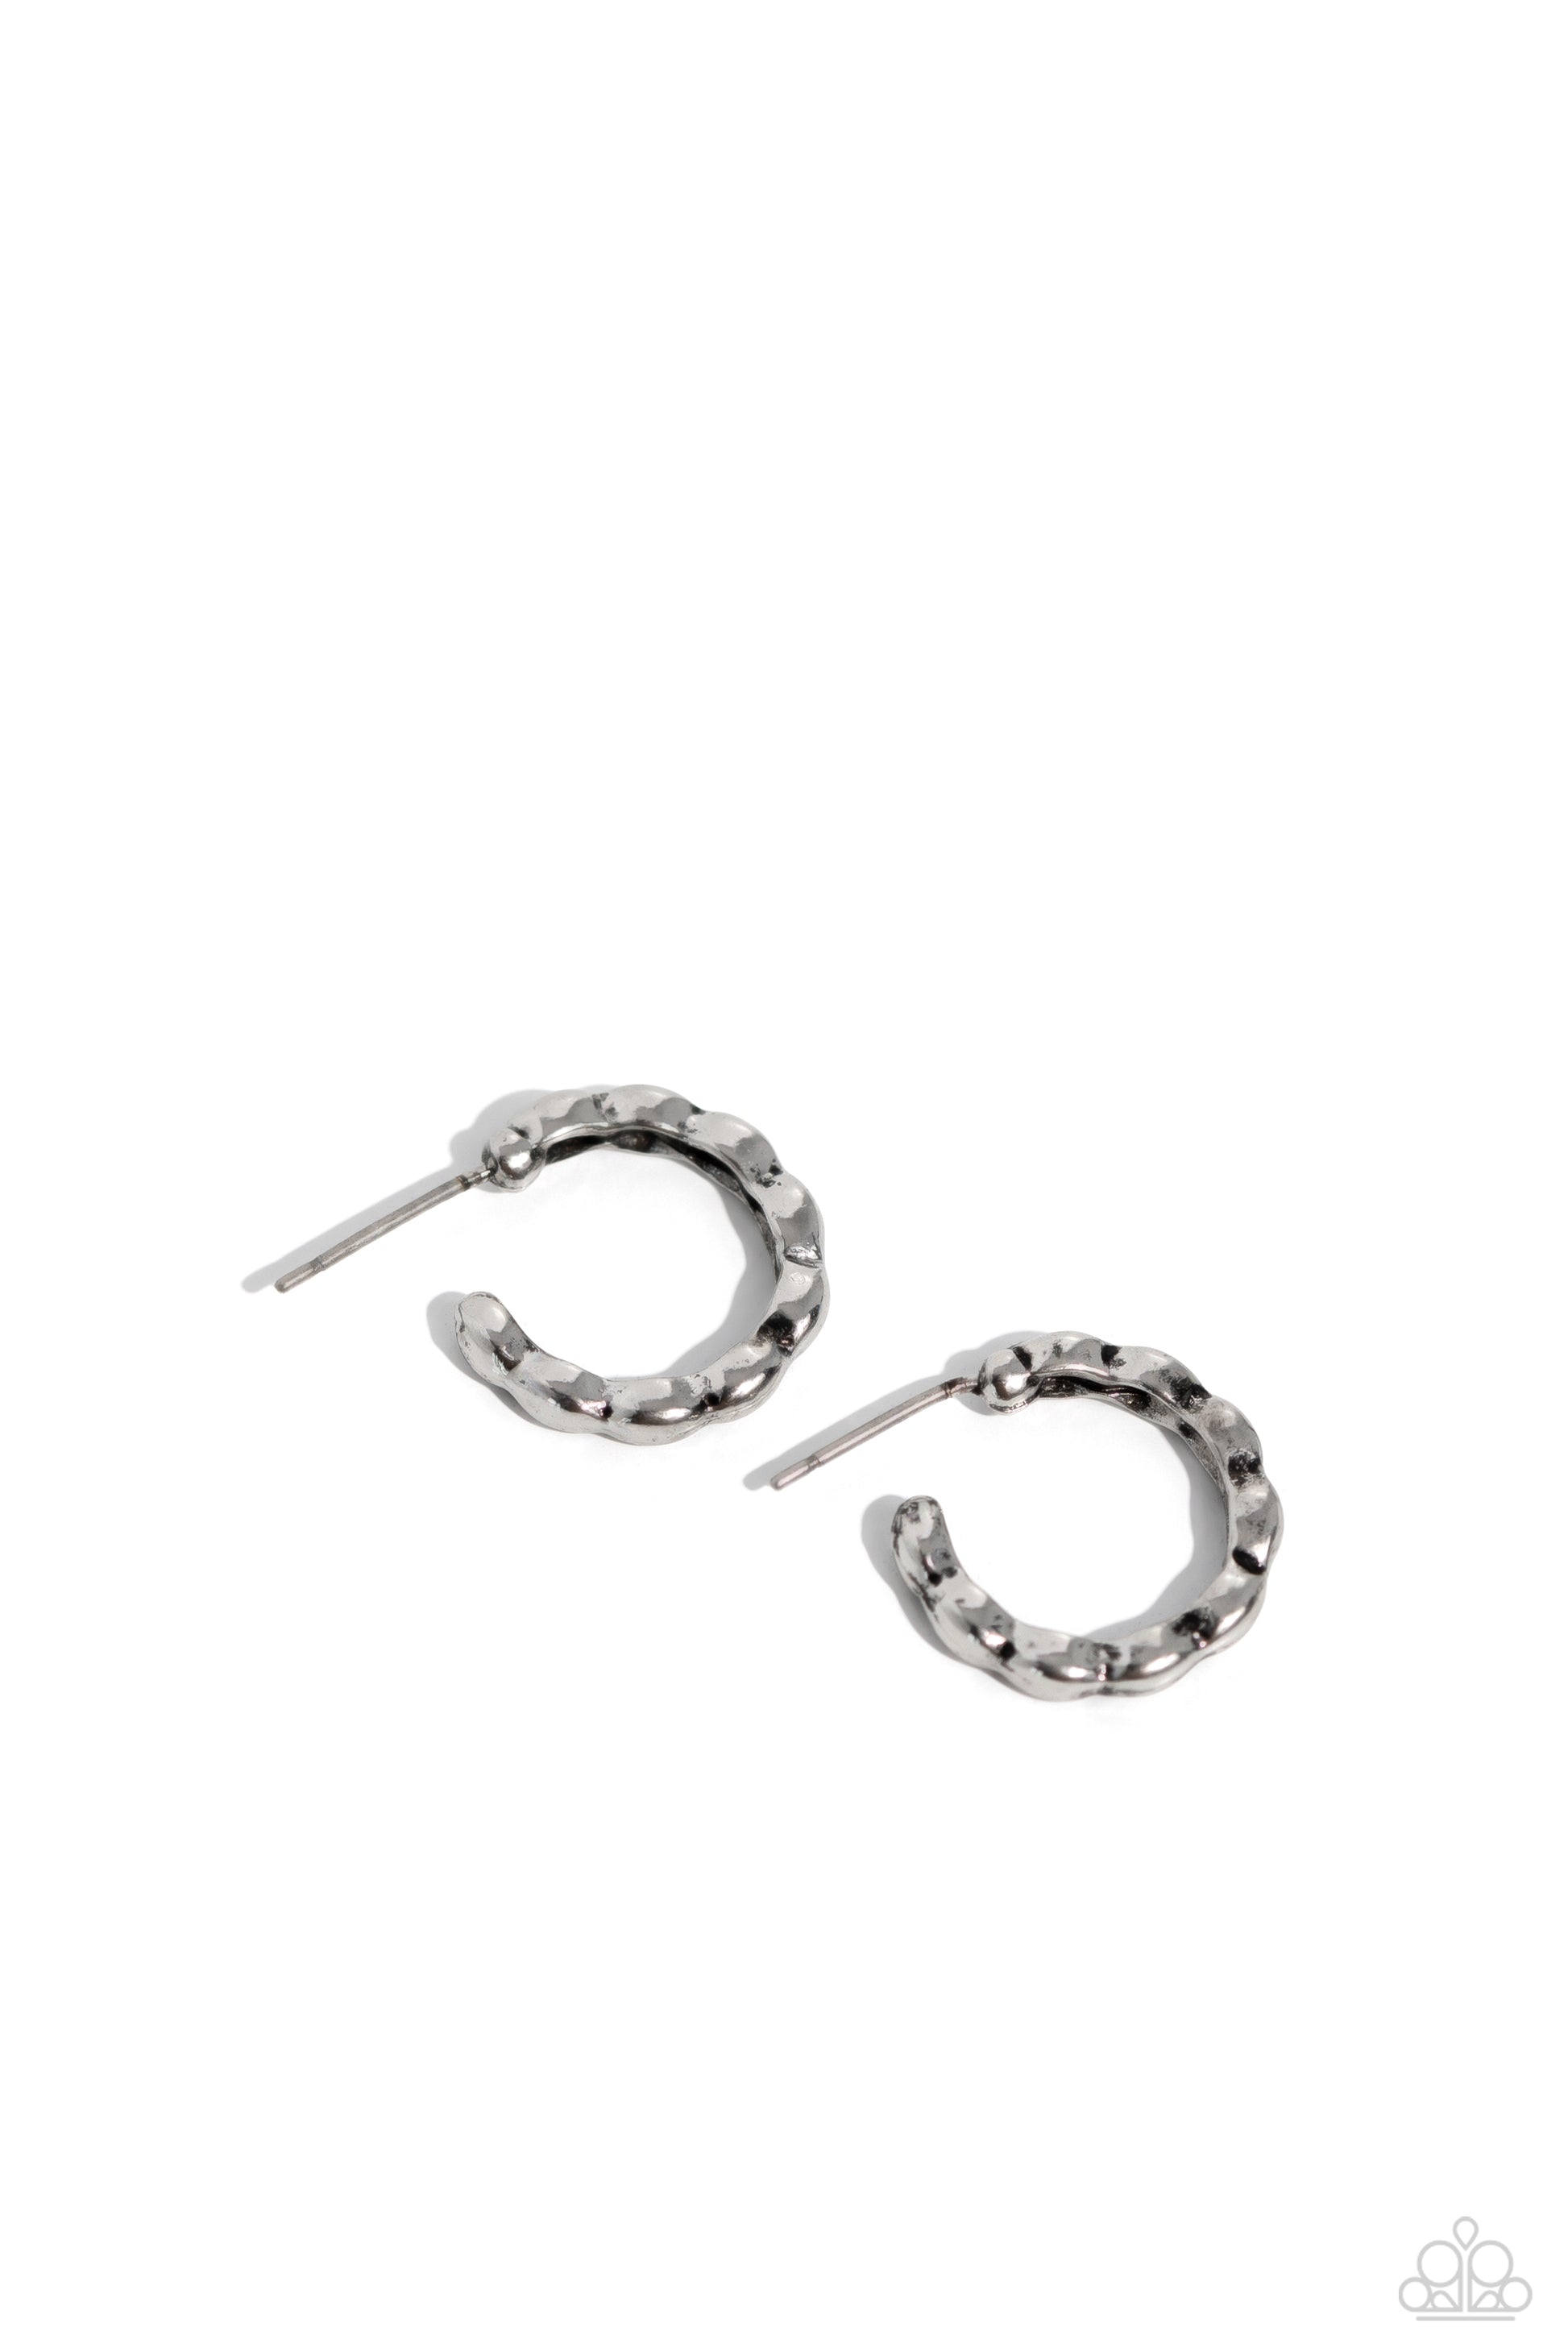 Buzzworthy Bling - Silver Earrings - Paparazzi Accessories - Alies Bling Bar